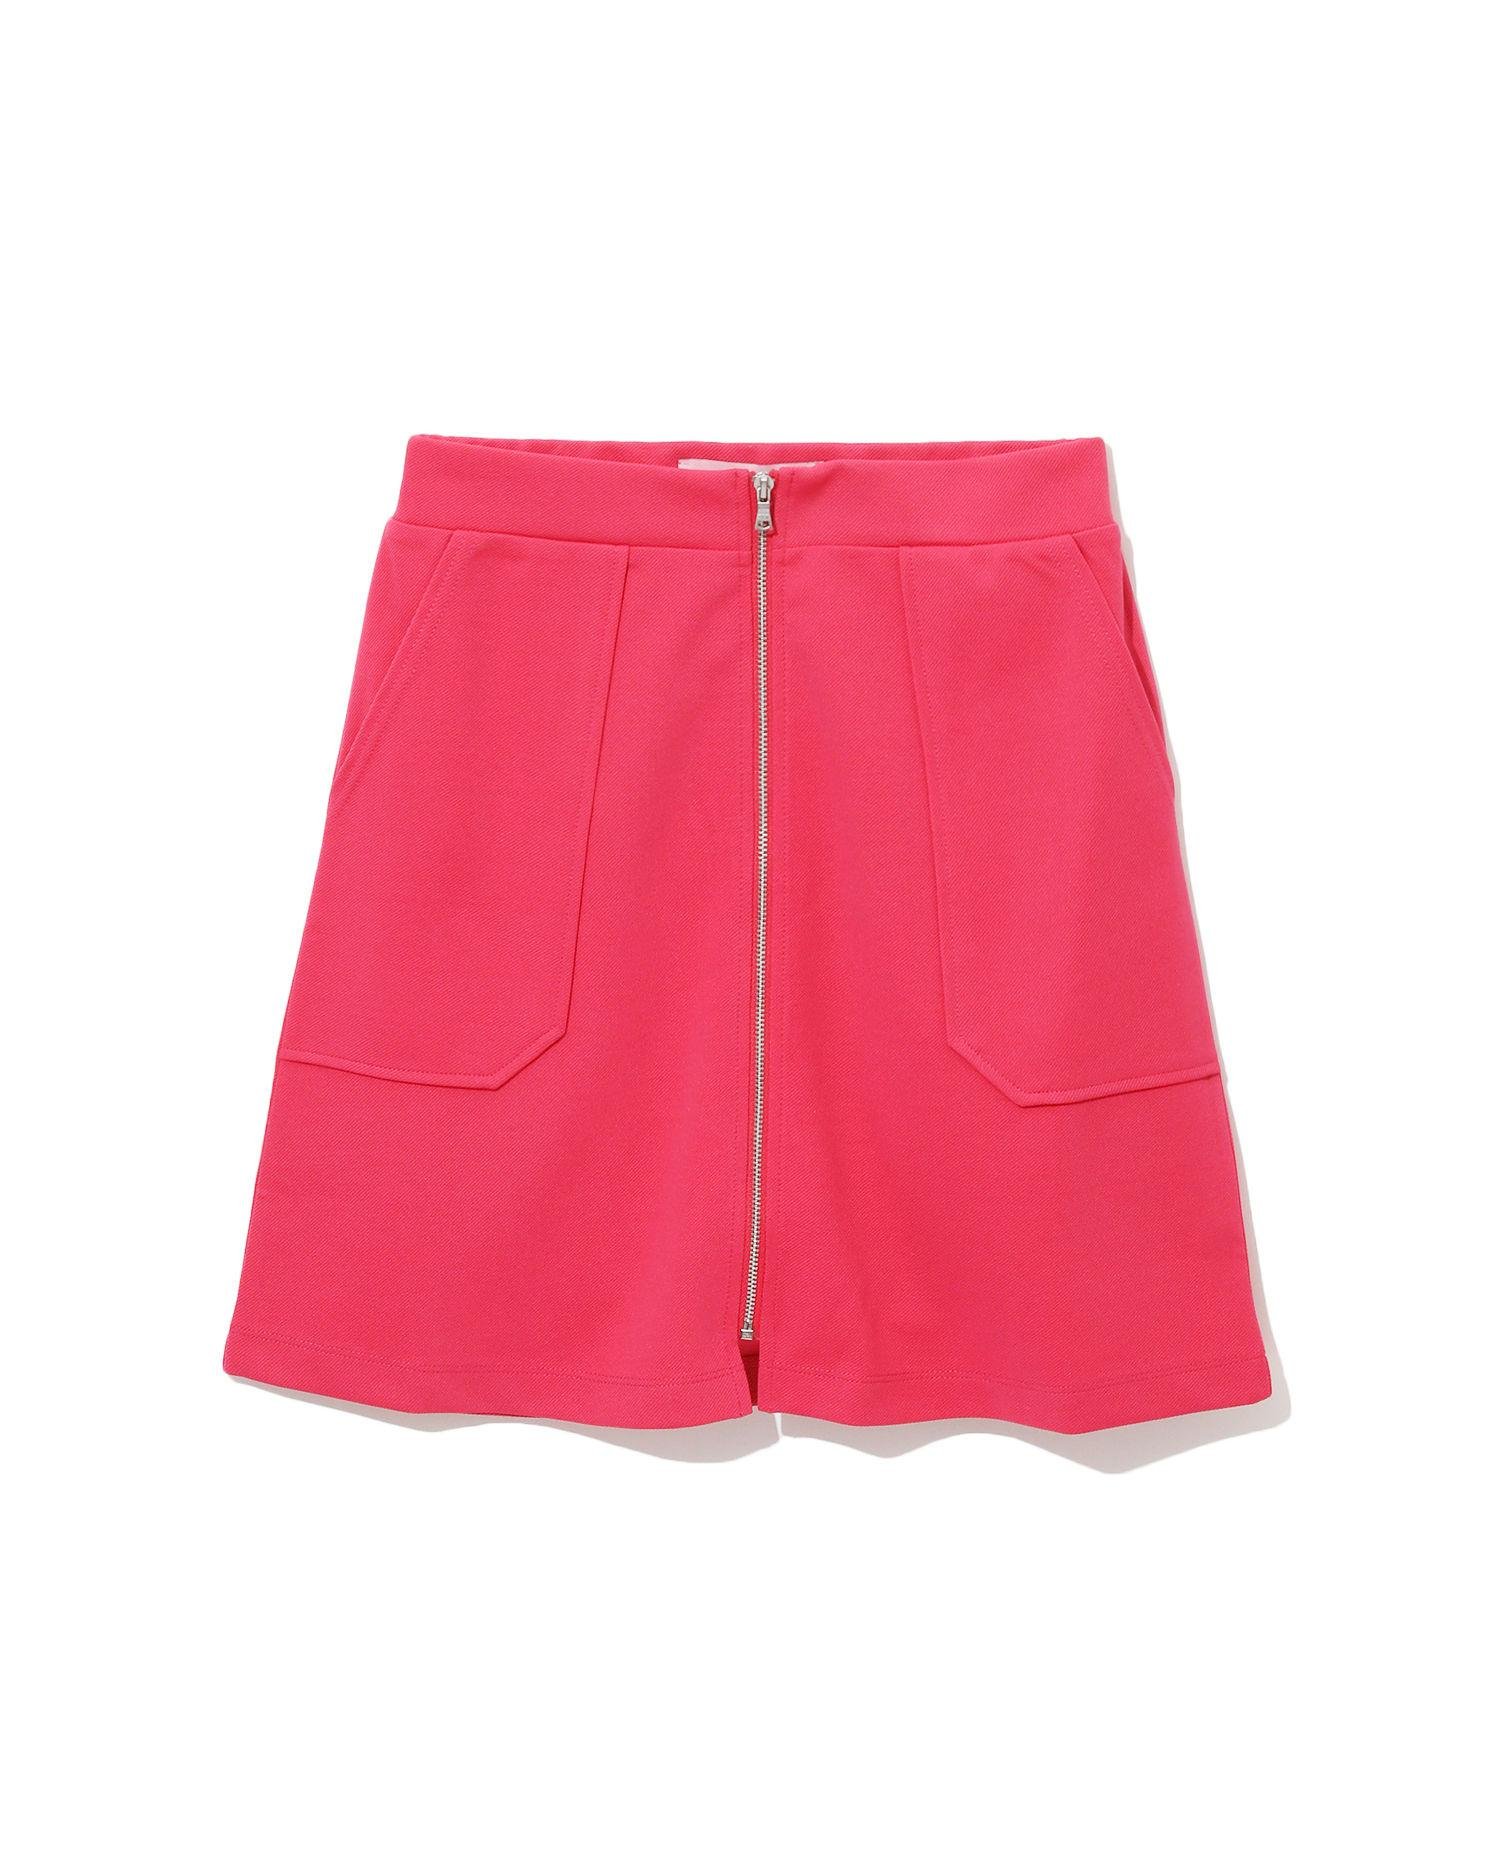 Zip up mini skirt by B+AB